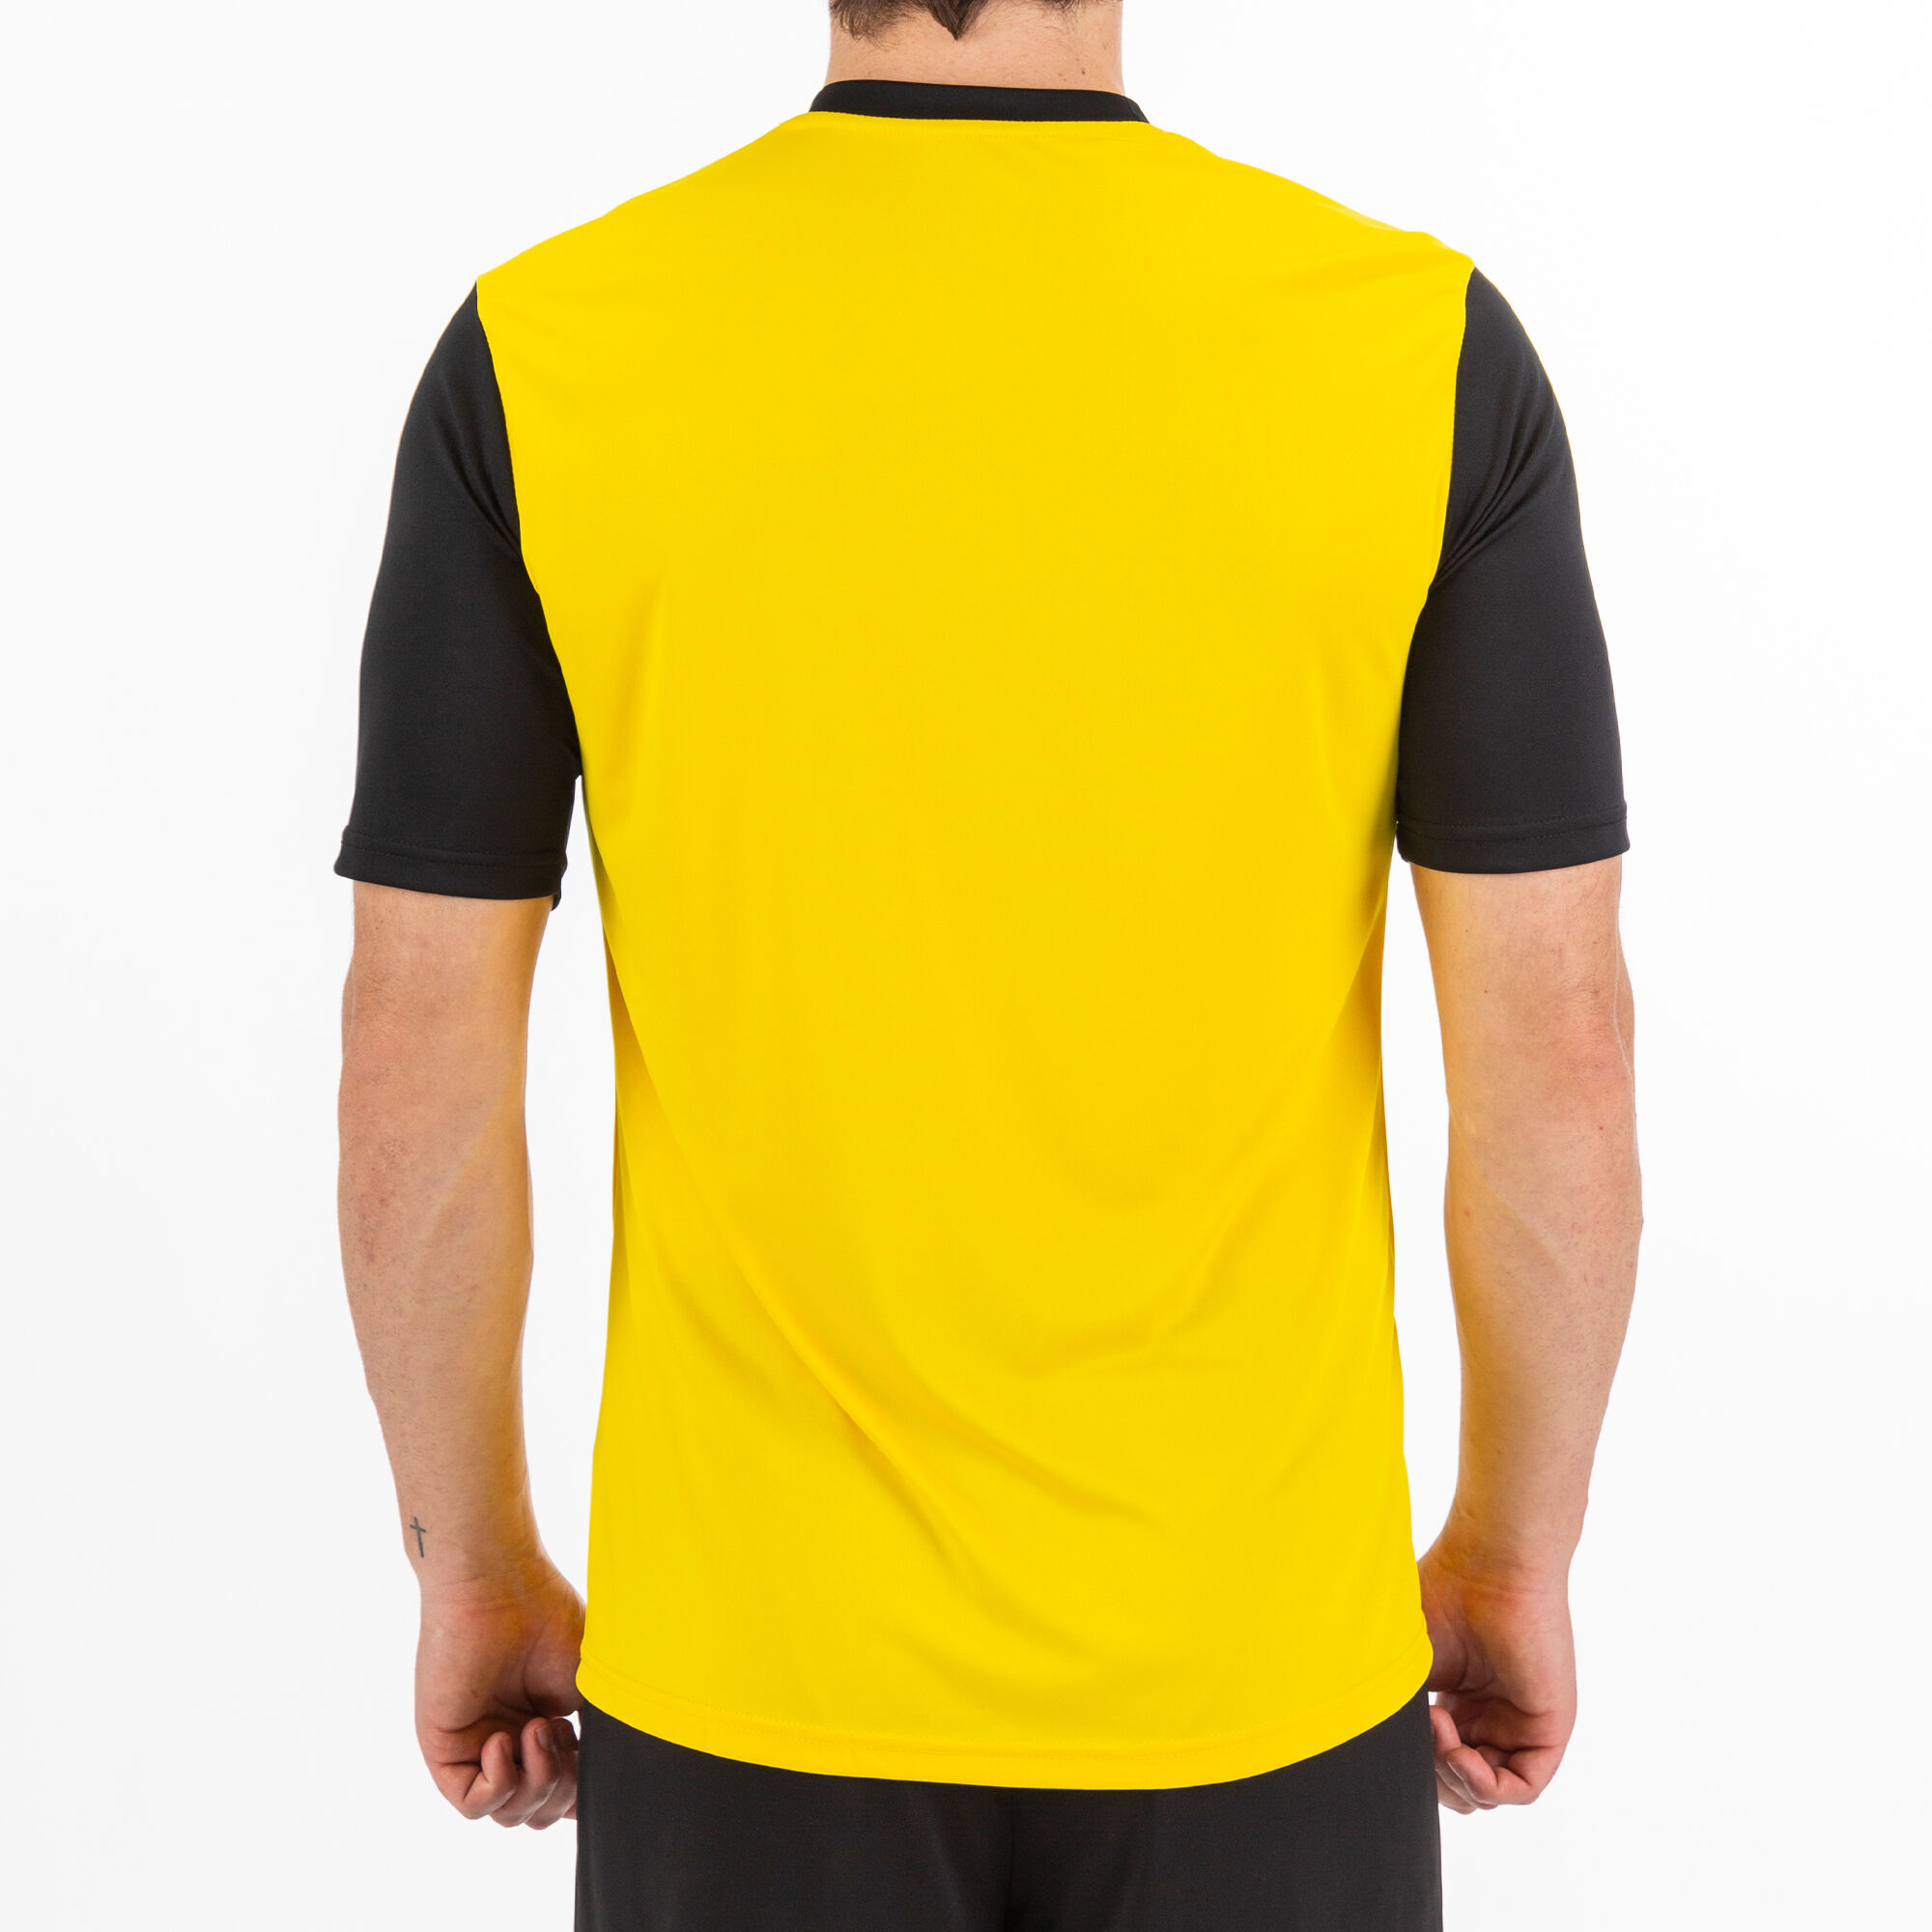 Shirt short sleeve man Winner yellow black